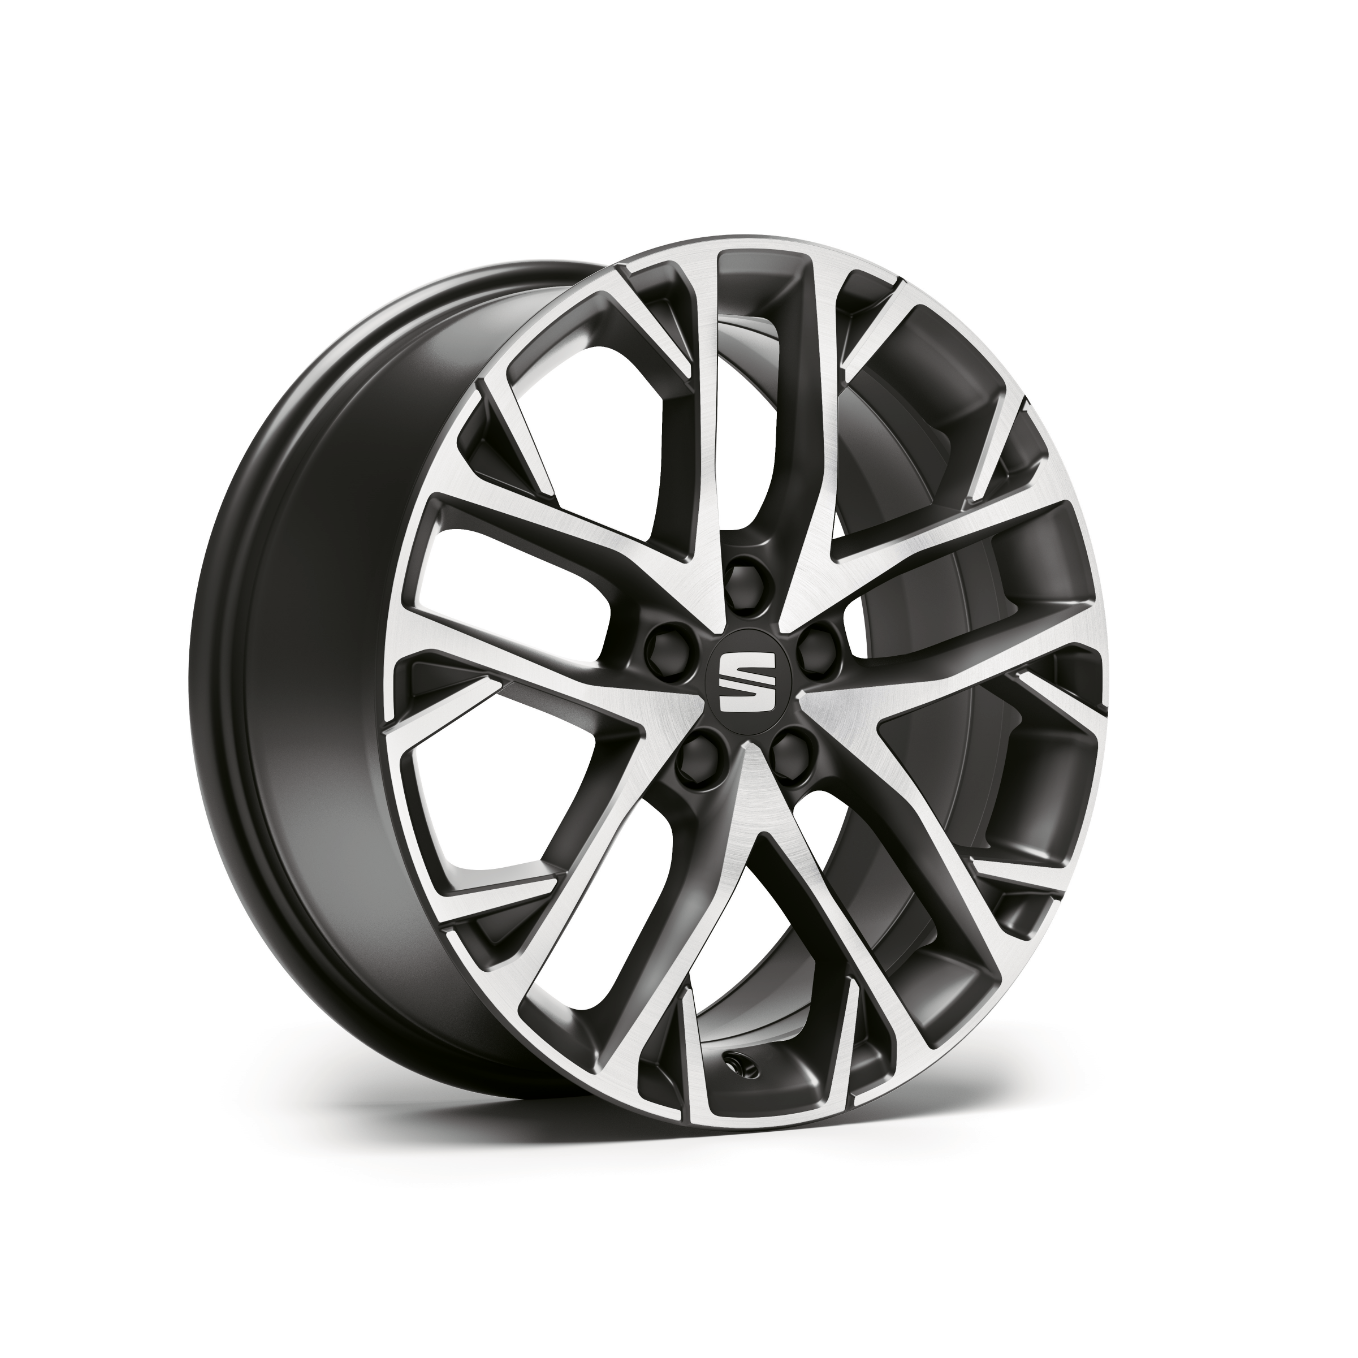 seat-ibiza-xc-dynamic-17-inch-sport-black-alloy-wheels